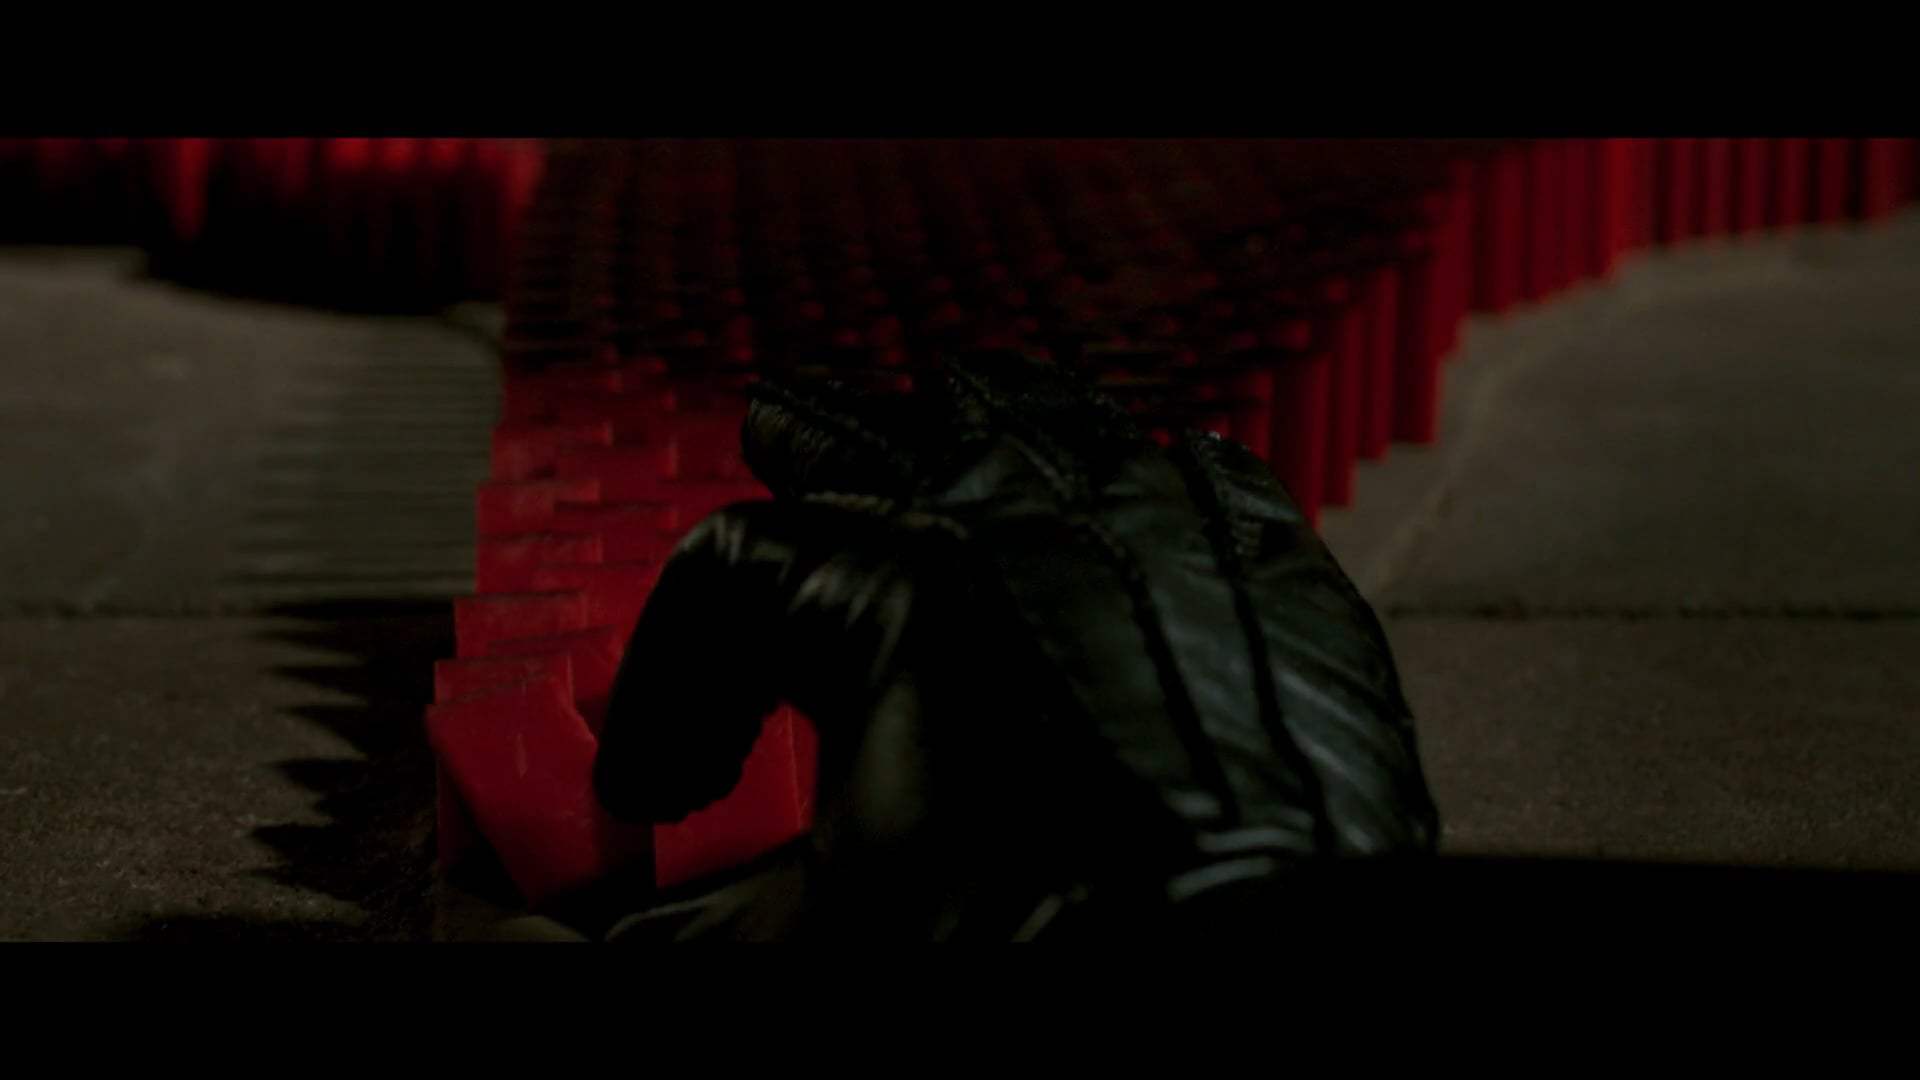 V for Vendetta 4k Ultra HD Trailer (2006) Screen Capture #3